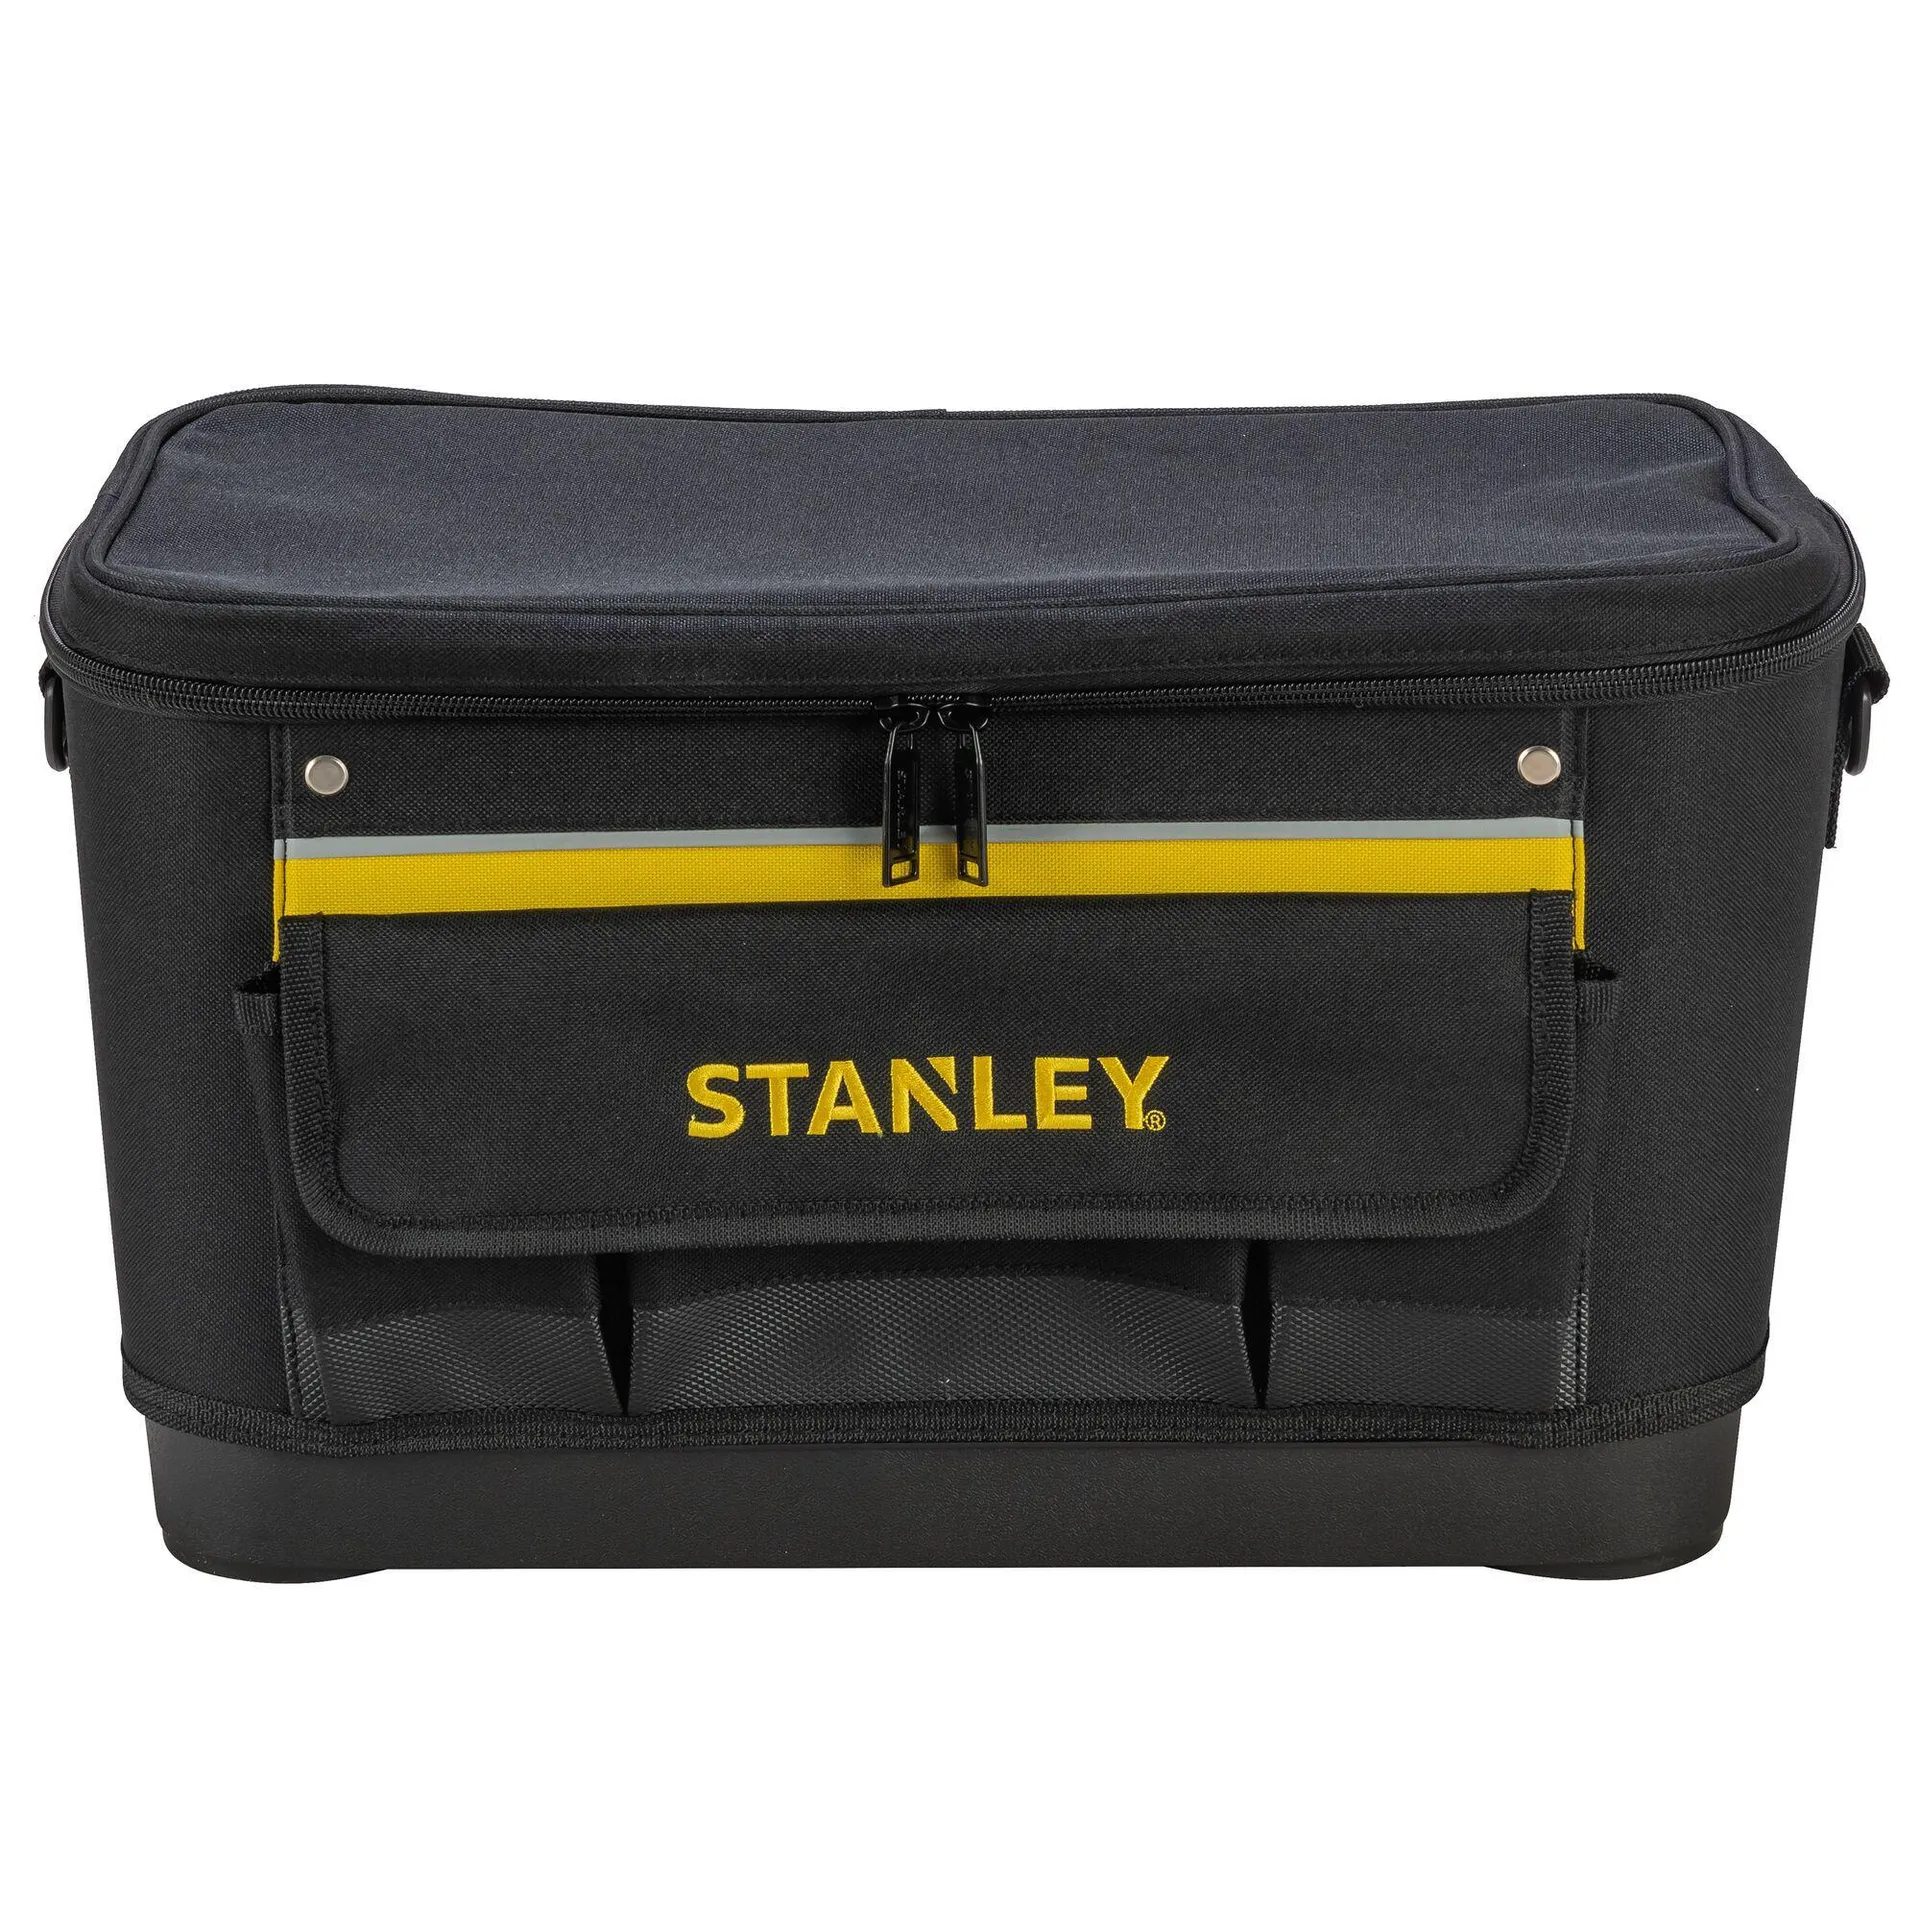 Stanley 16" Tool Bag